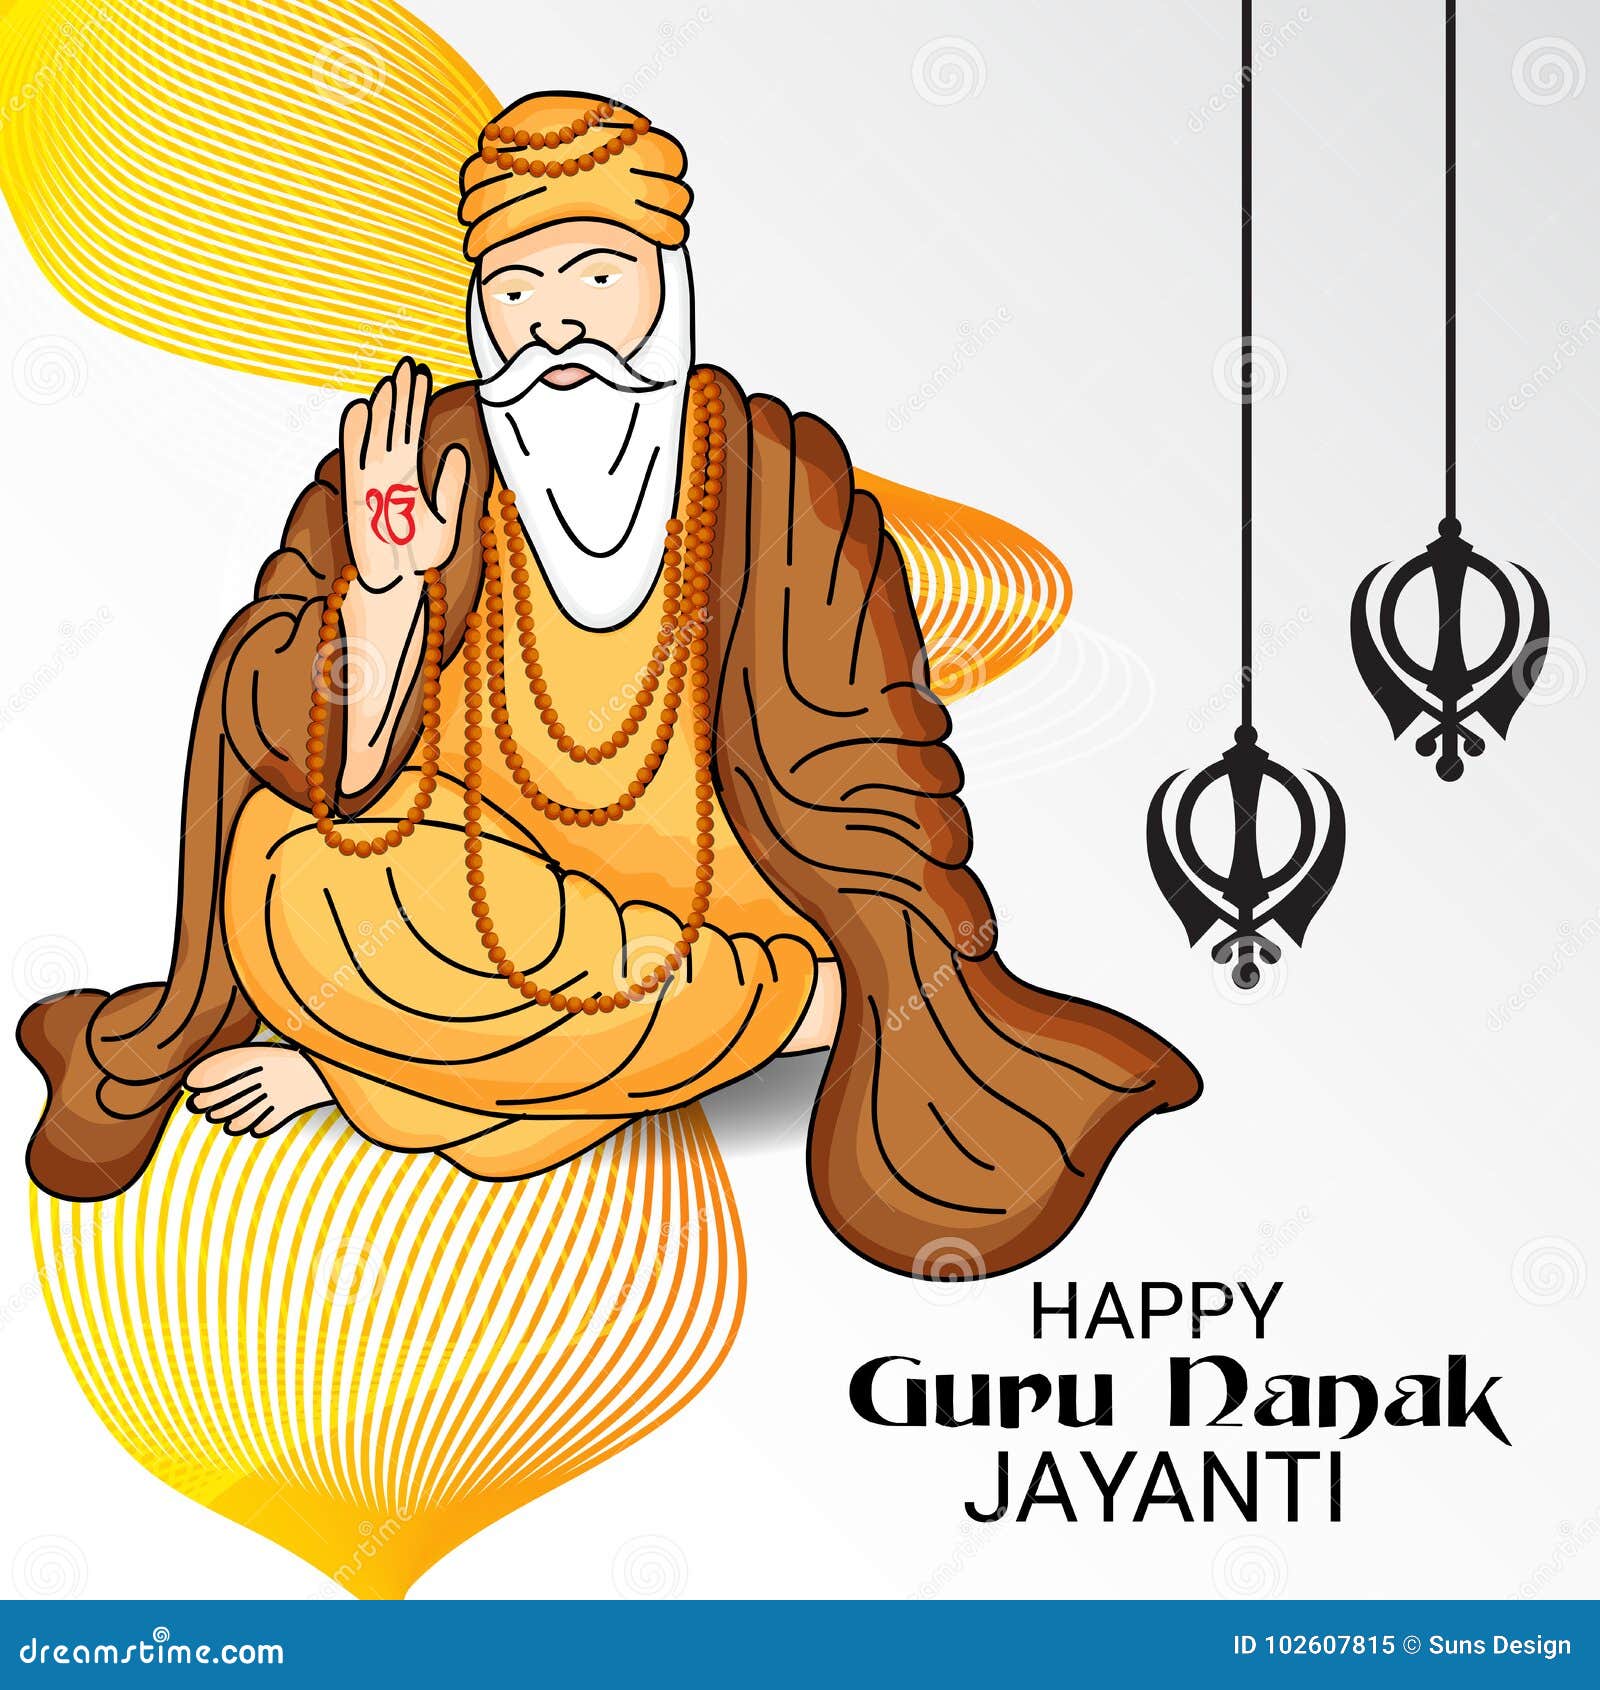 Happy Guru Nanak Jayanti. stock illustration. Illustration of ...